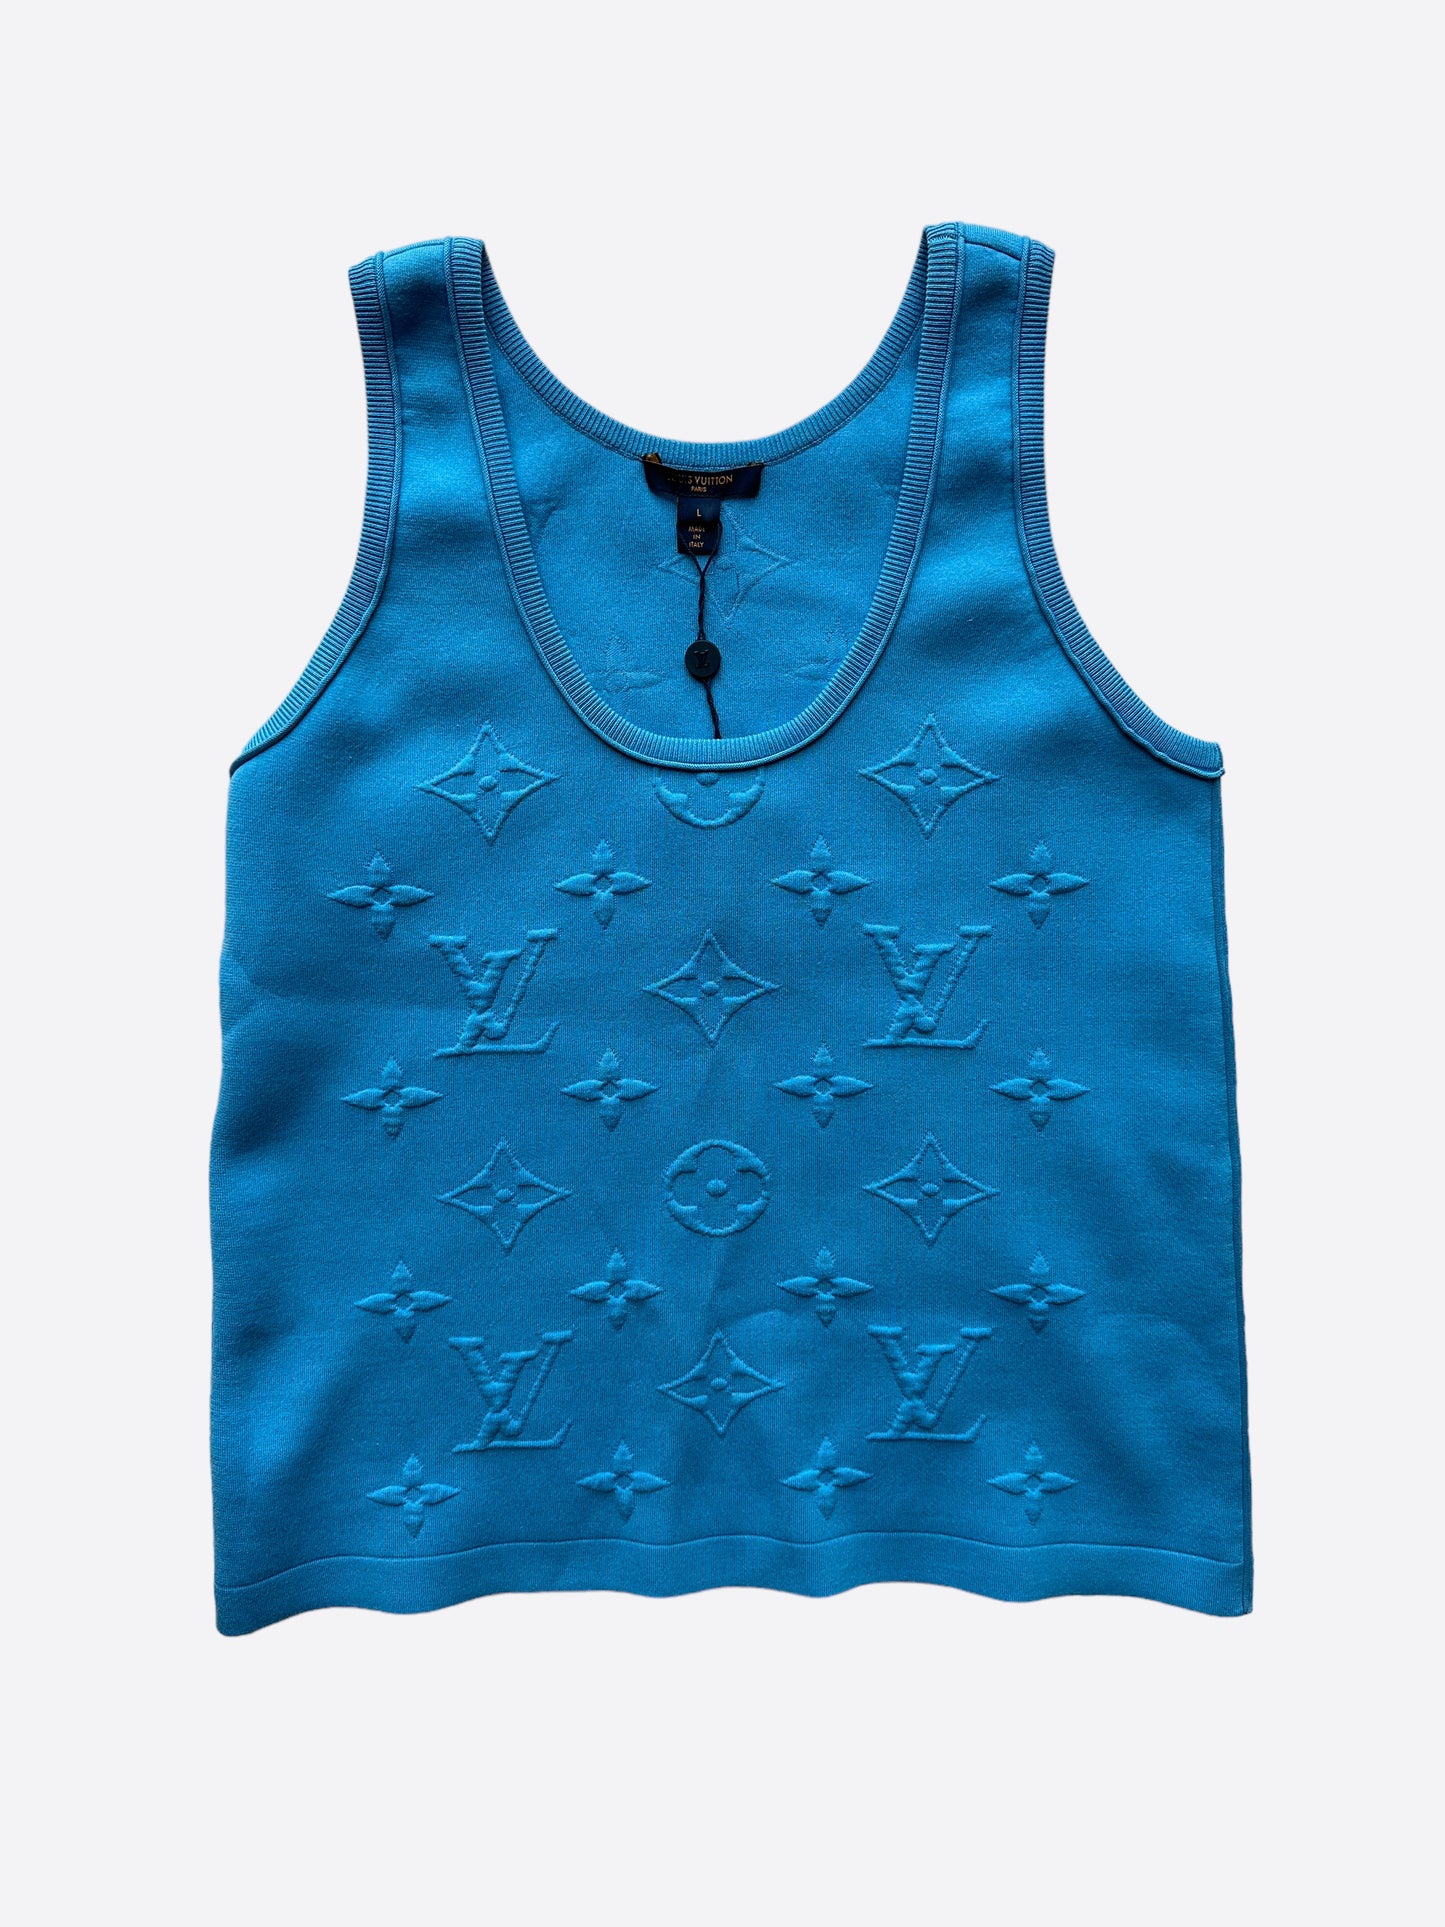 Louis Vuitton Blue 3D Monogram Women's Tank Top